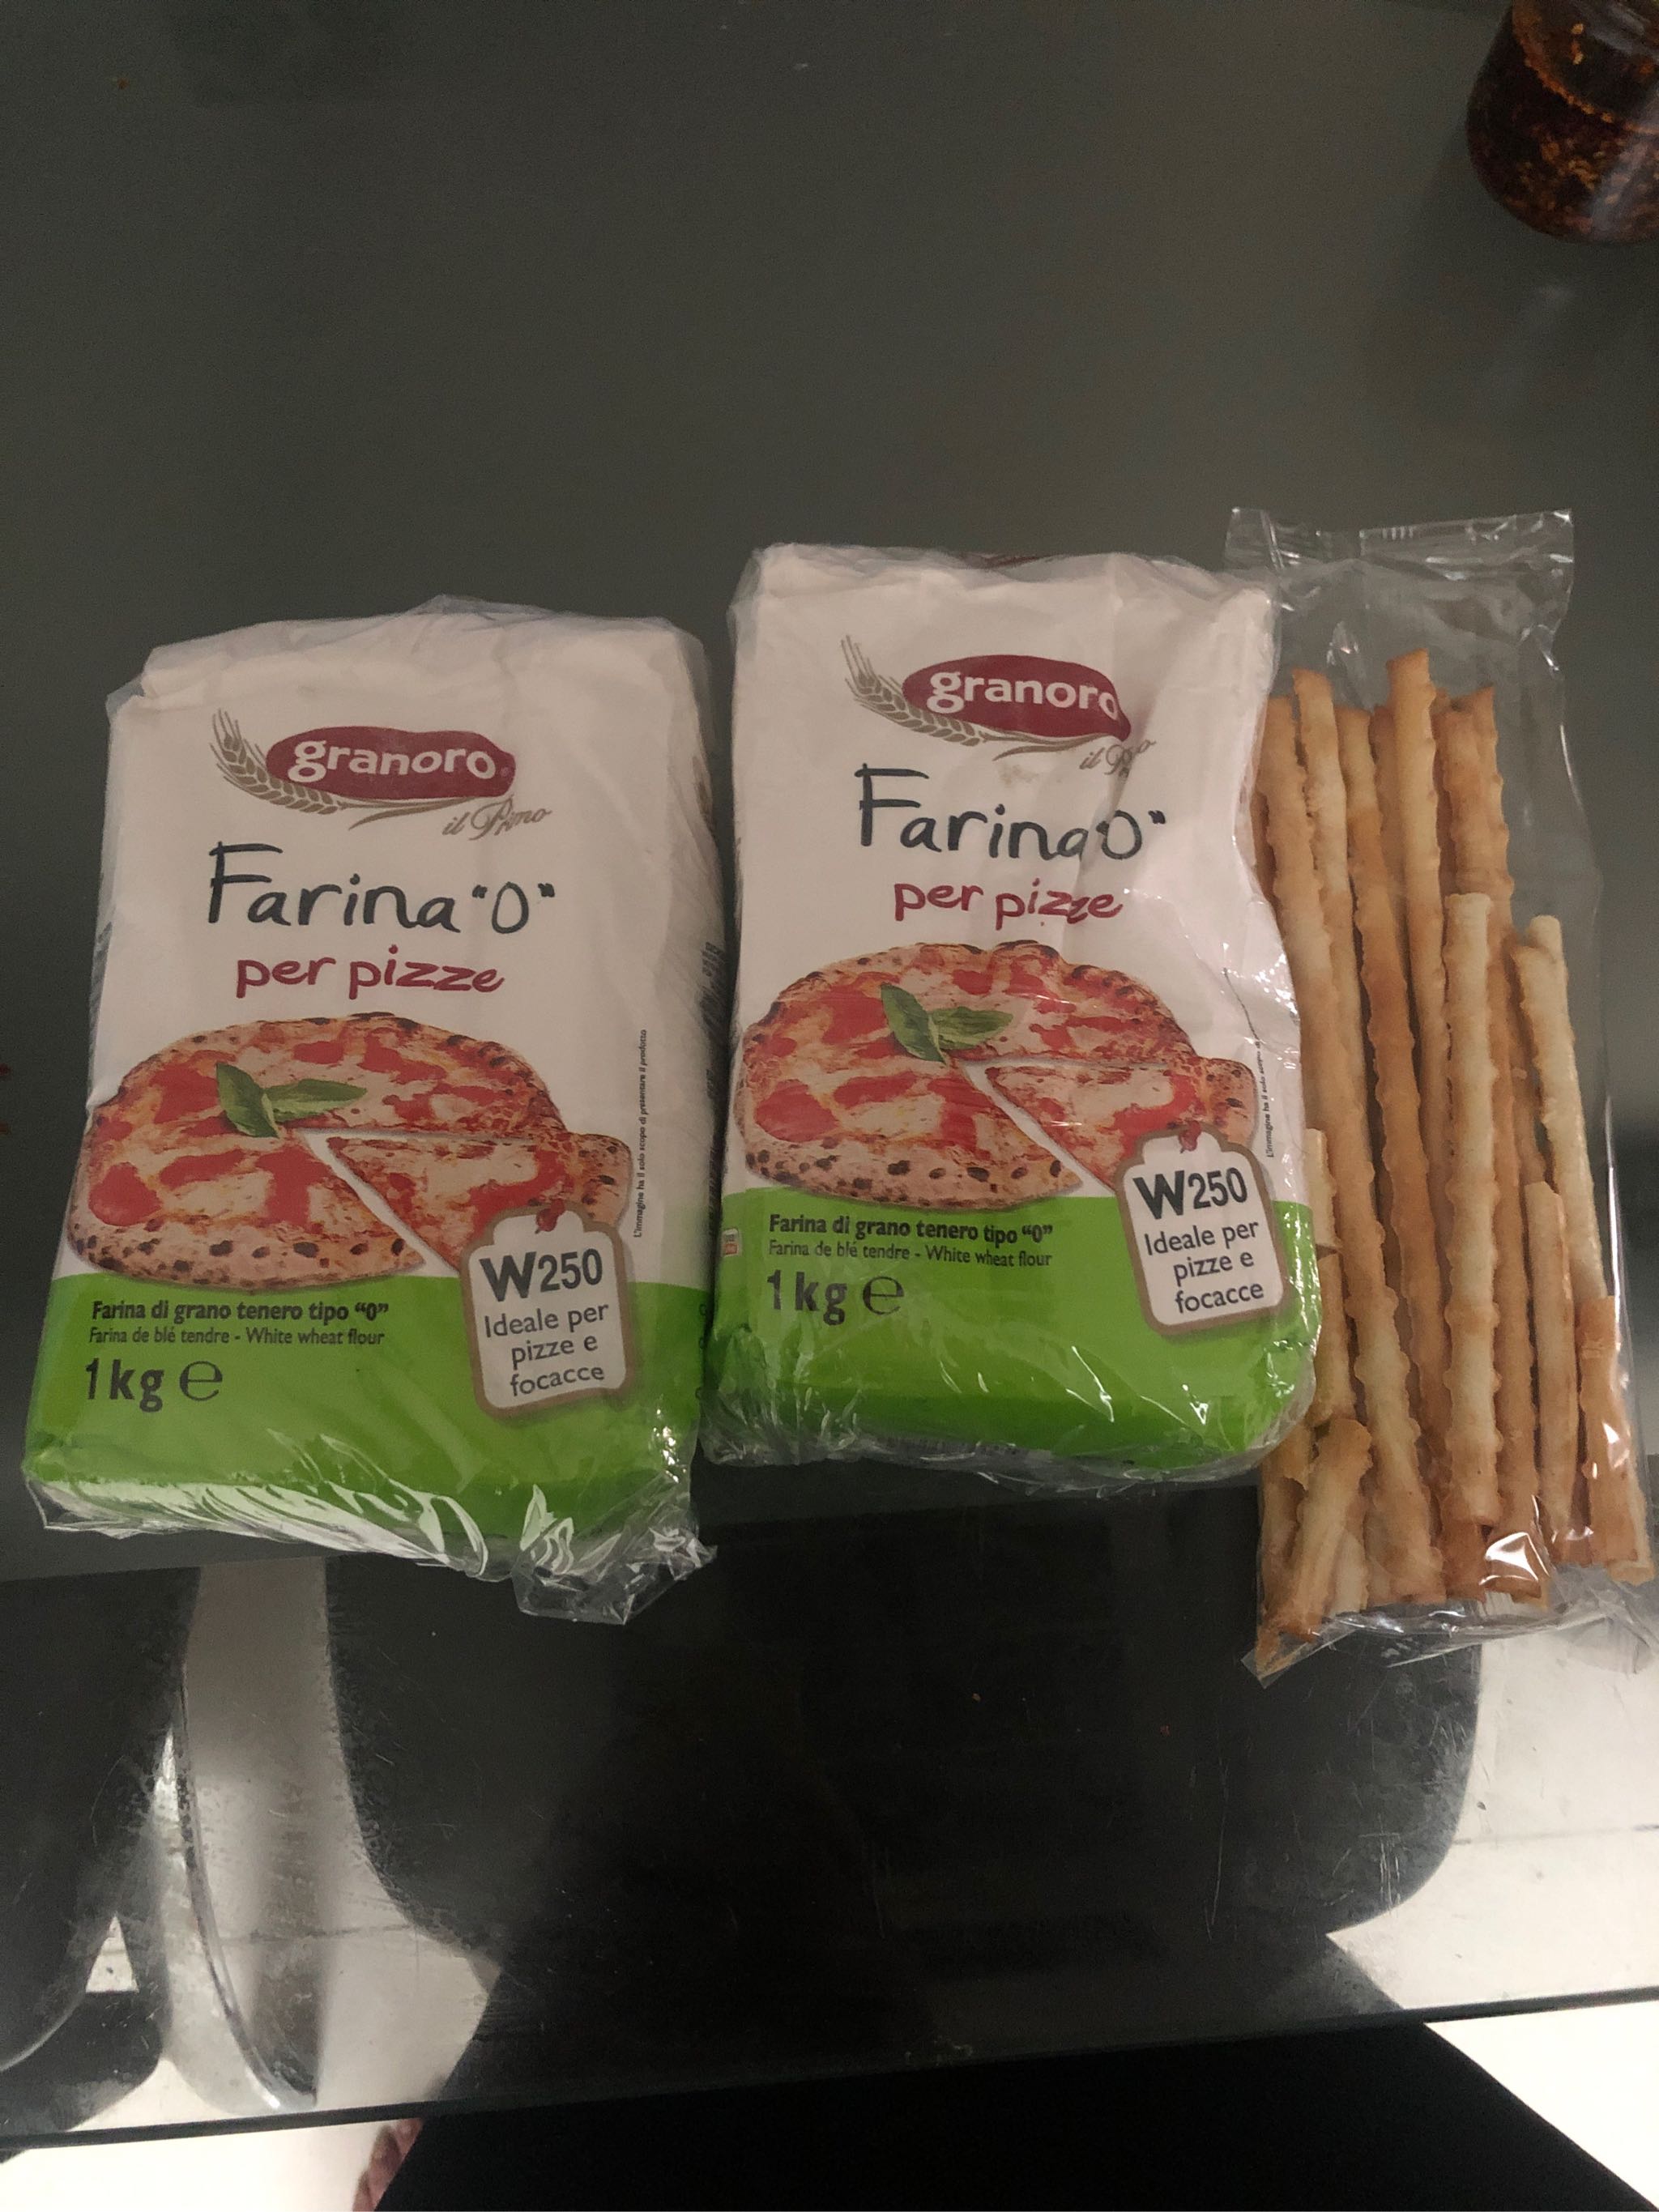 Granoro Farina 00 Italian Flour